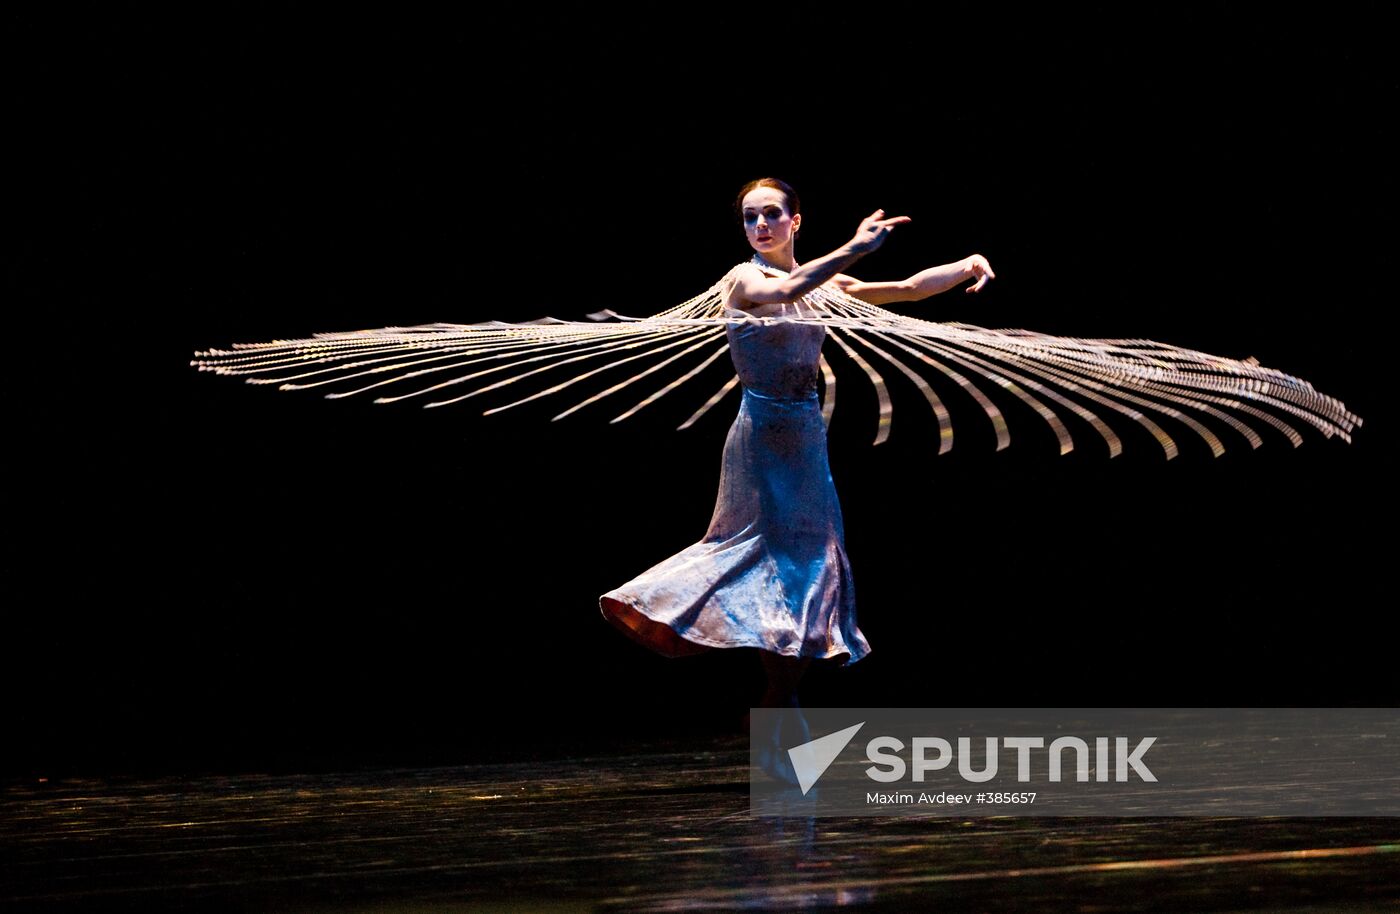 Diana Vishneva in "Beauty in Motion" project